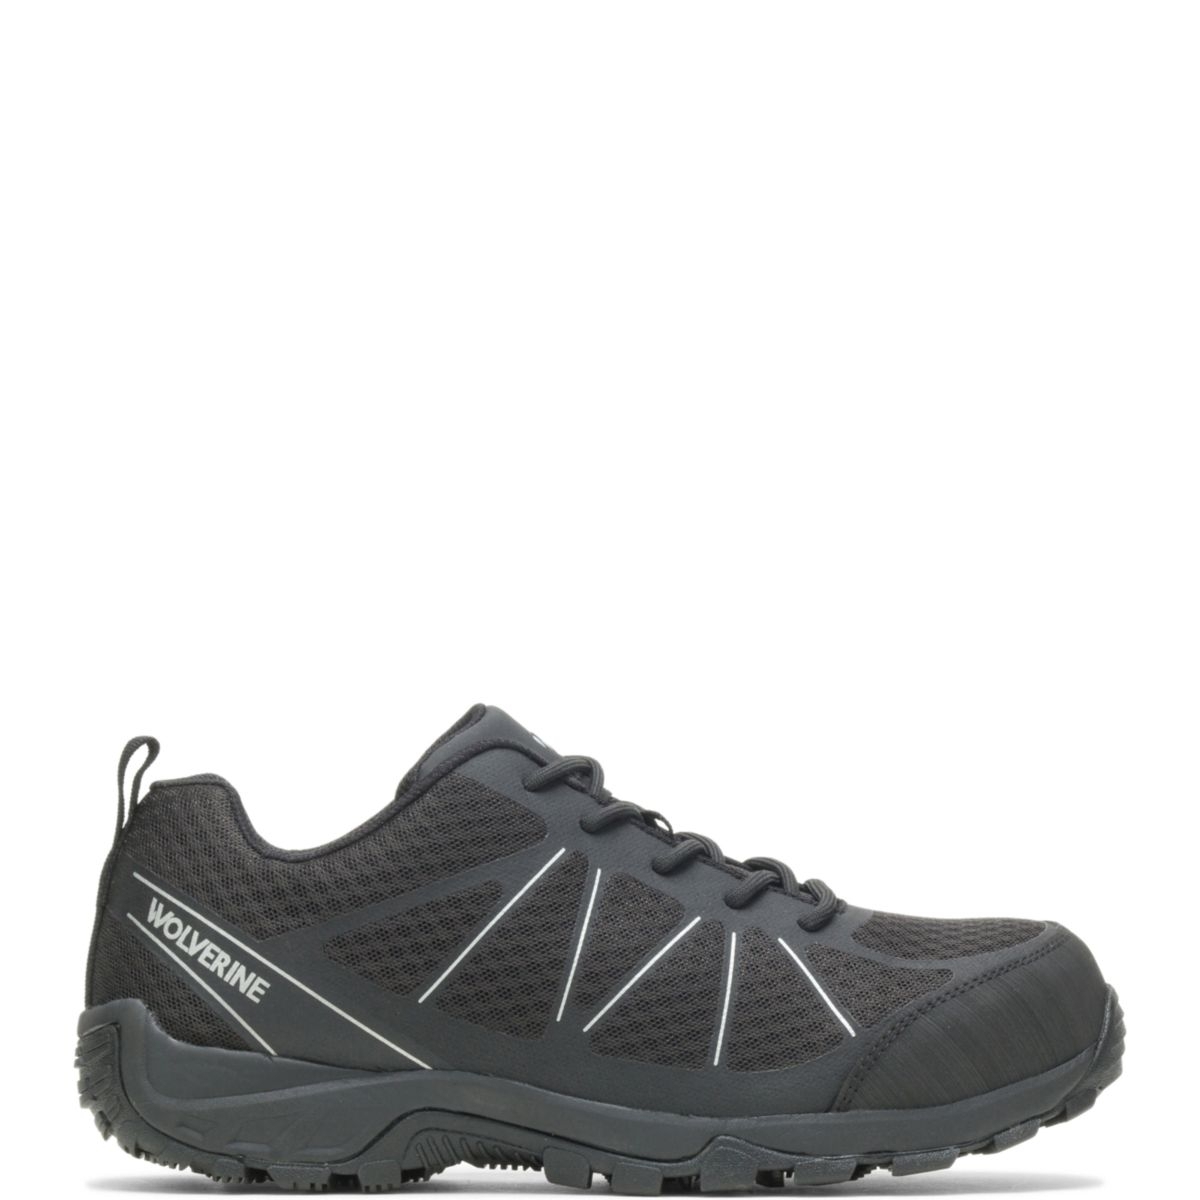 WOLVERINE Men's Amherst II CarbonMAXÂ® Composite Toe Work Shoe Black - W201147 BLACK - BLACK, 13